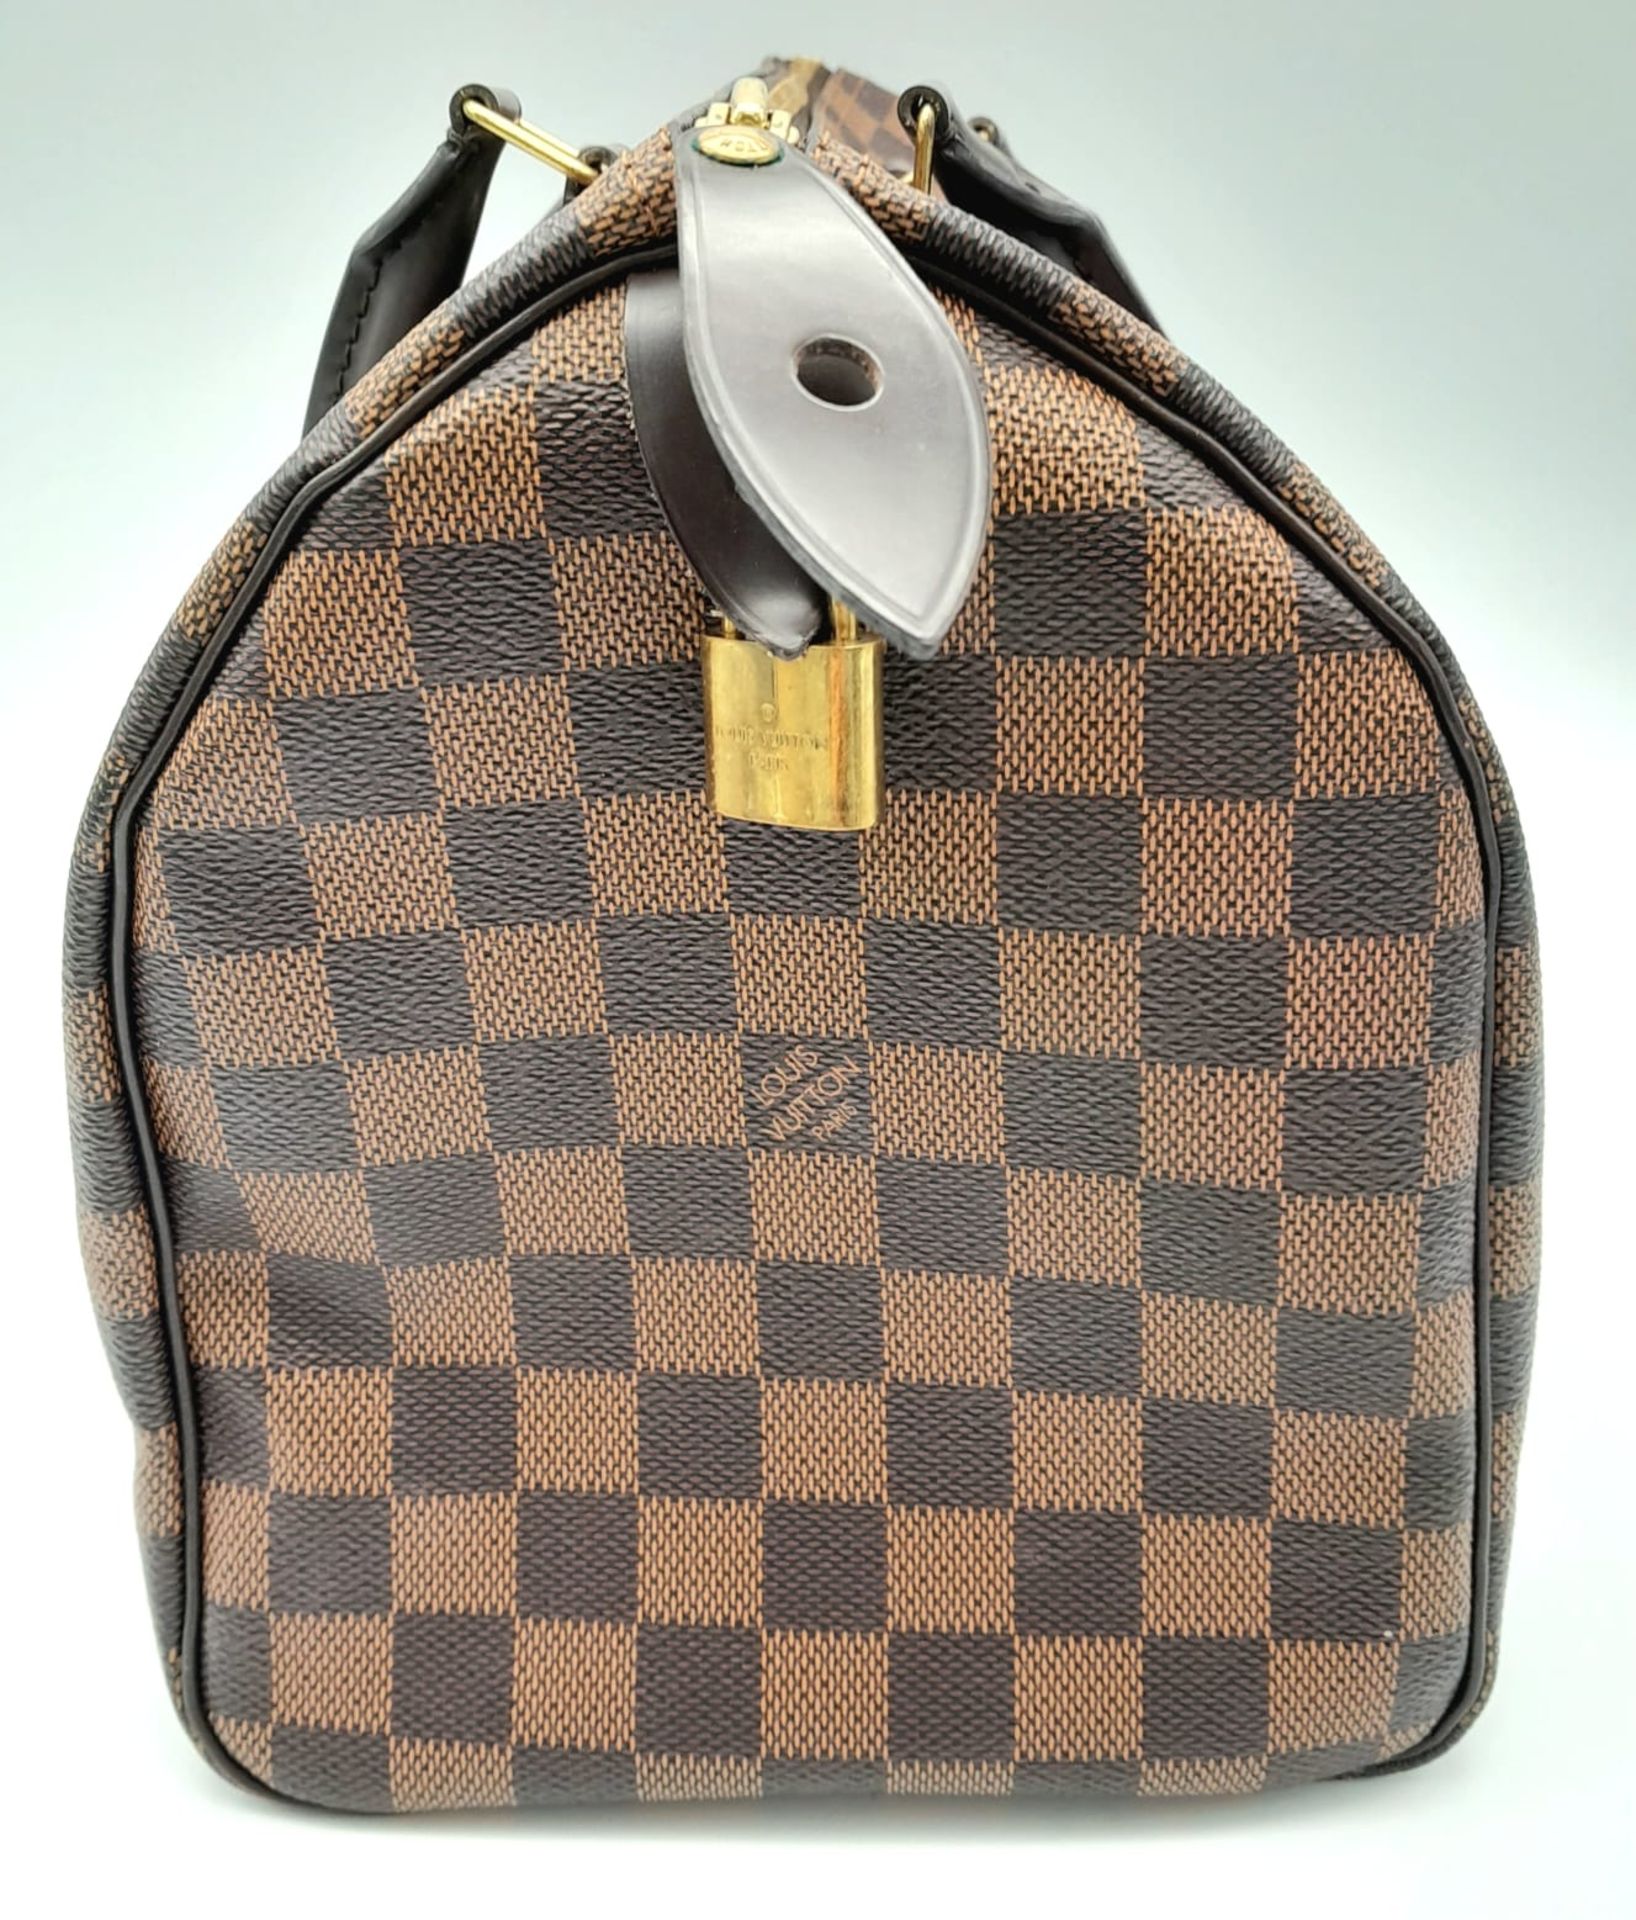 A Louis Vuitton Speedy 30 ebony damier canvas Handbag. Accessories to include padlock and key. - Image 4 of 7